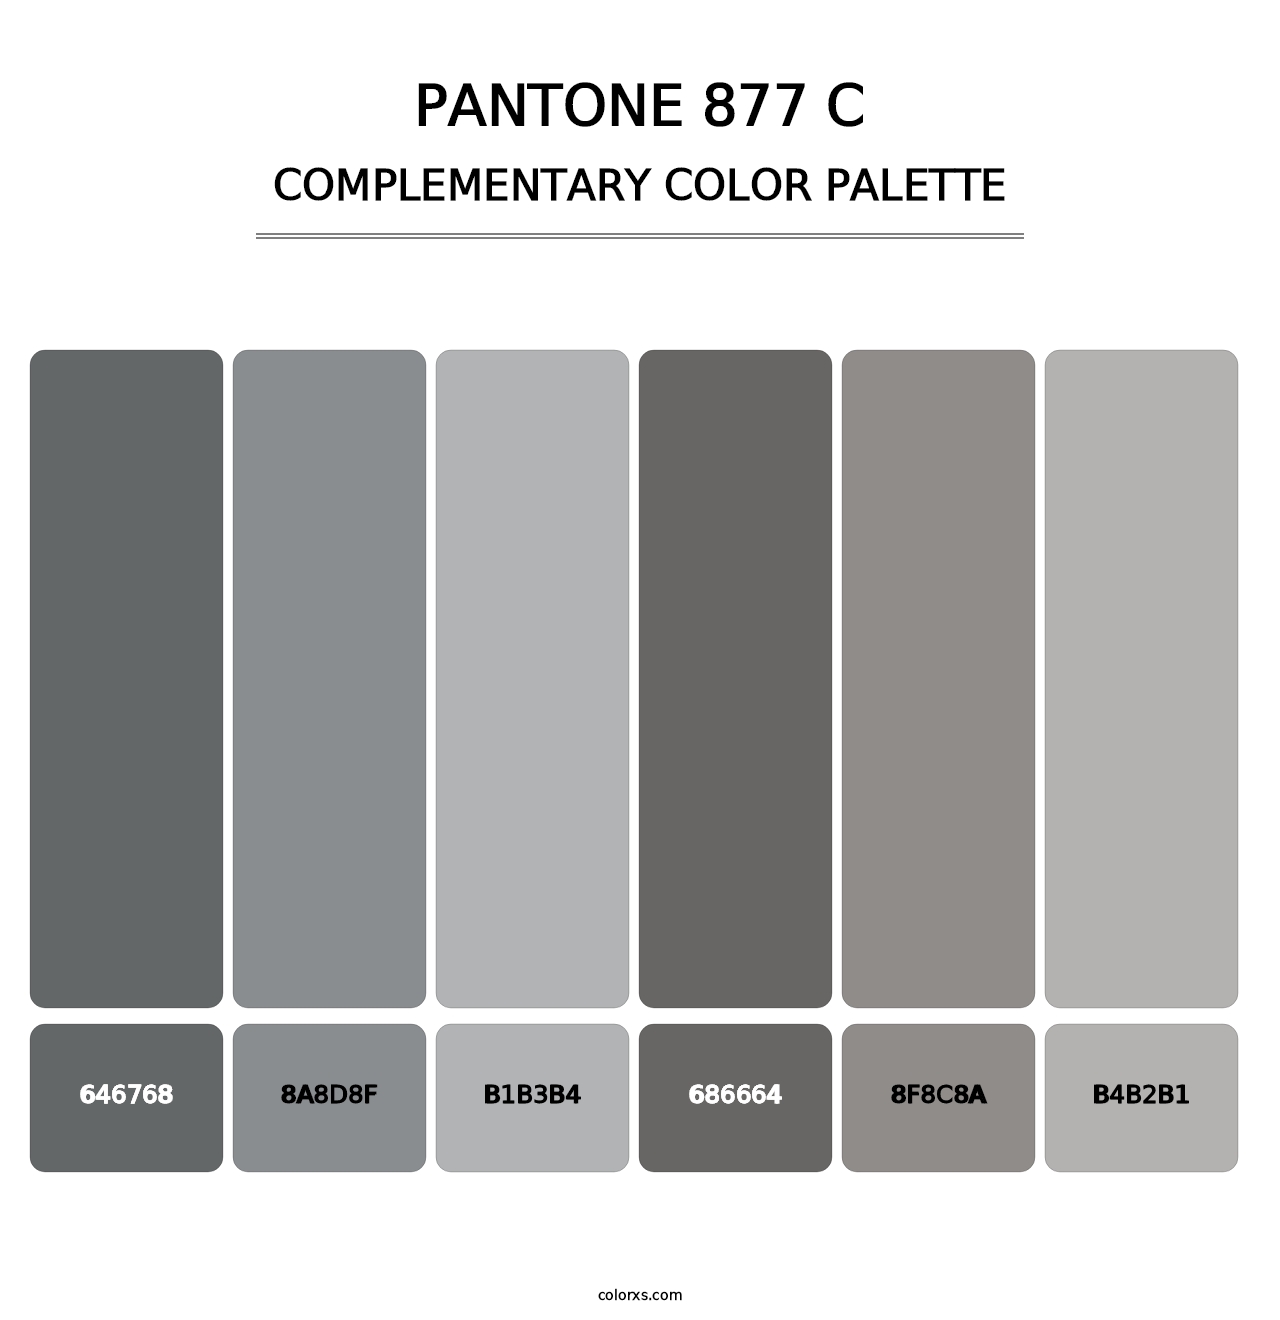 PANTONE 877 C - Complementary Color Palette